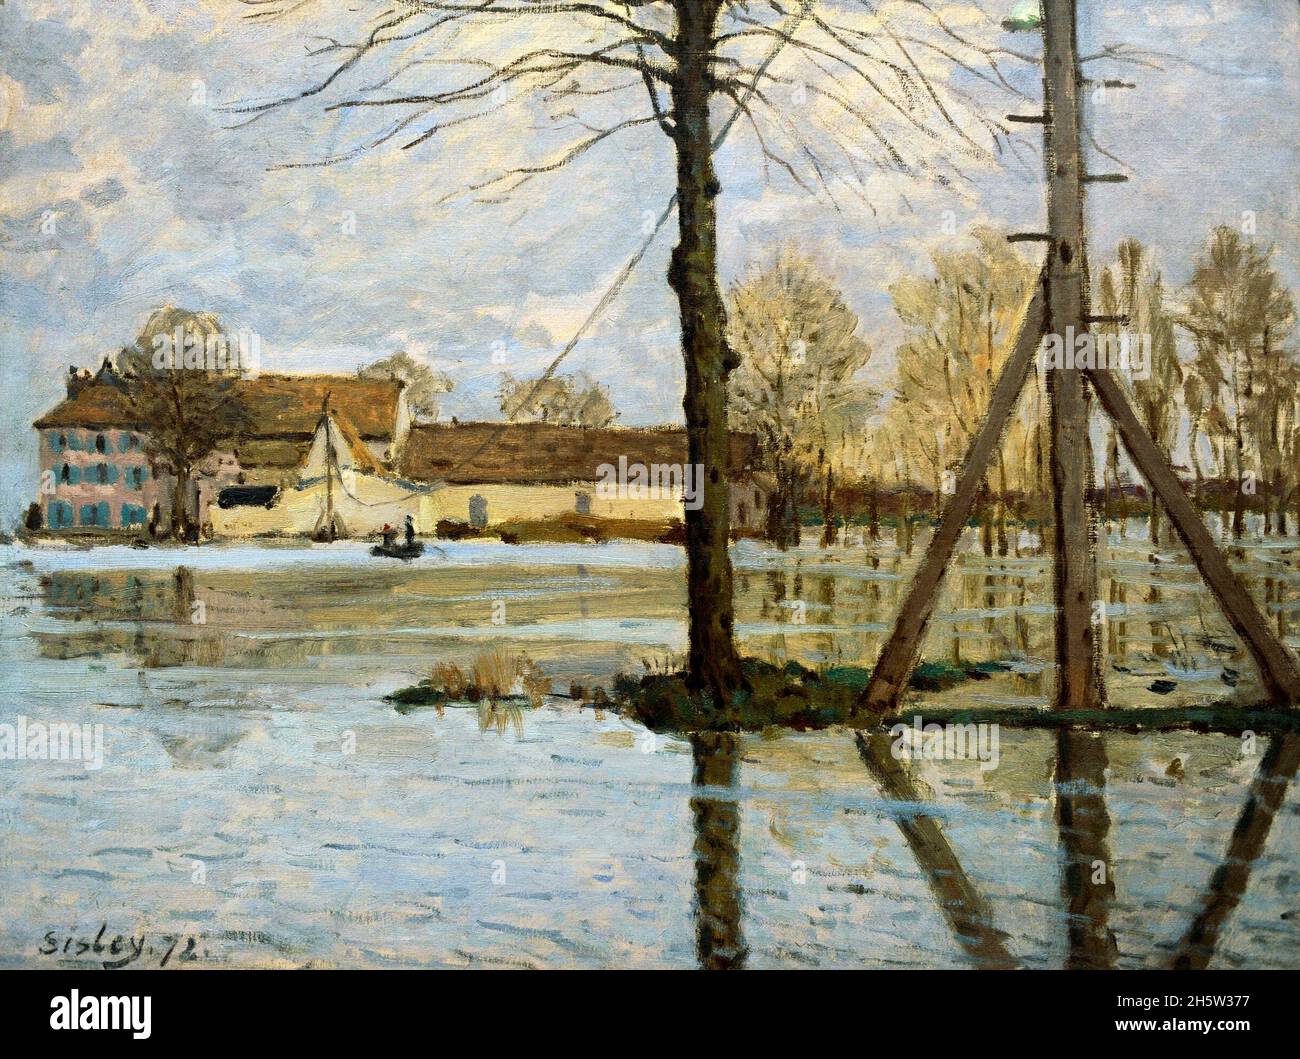 Alfred Sisley (1839-1899). Englischer impressionistischer Maler. Fähre zur Ile-de-la Loge, Flood, 1872. Öl auf Leinwand. Ny Carlsberg Glyptotek. Kopenhagen, Dänemark. Stockfoto